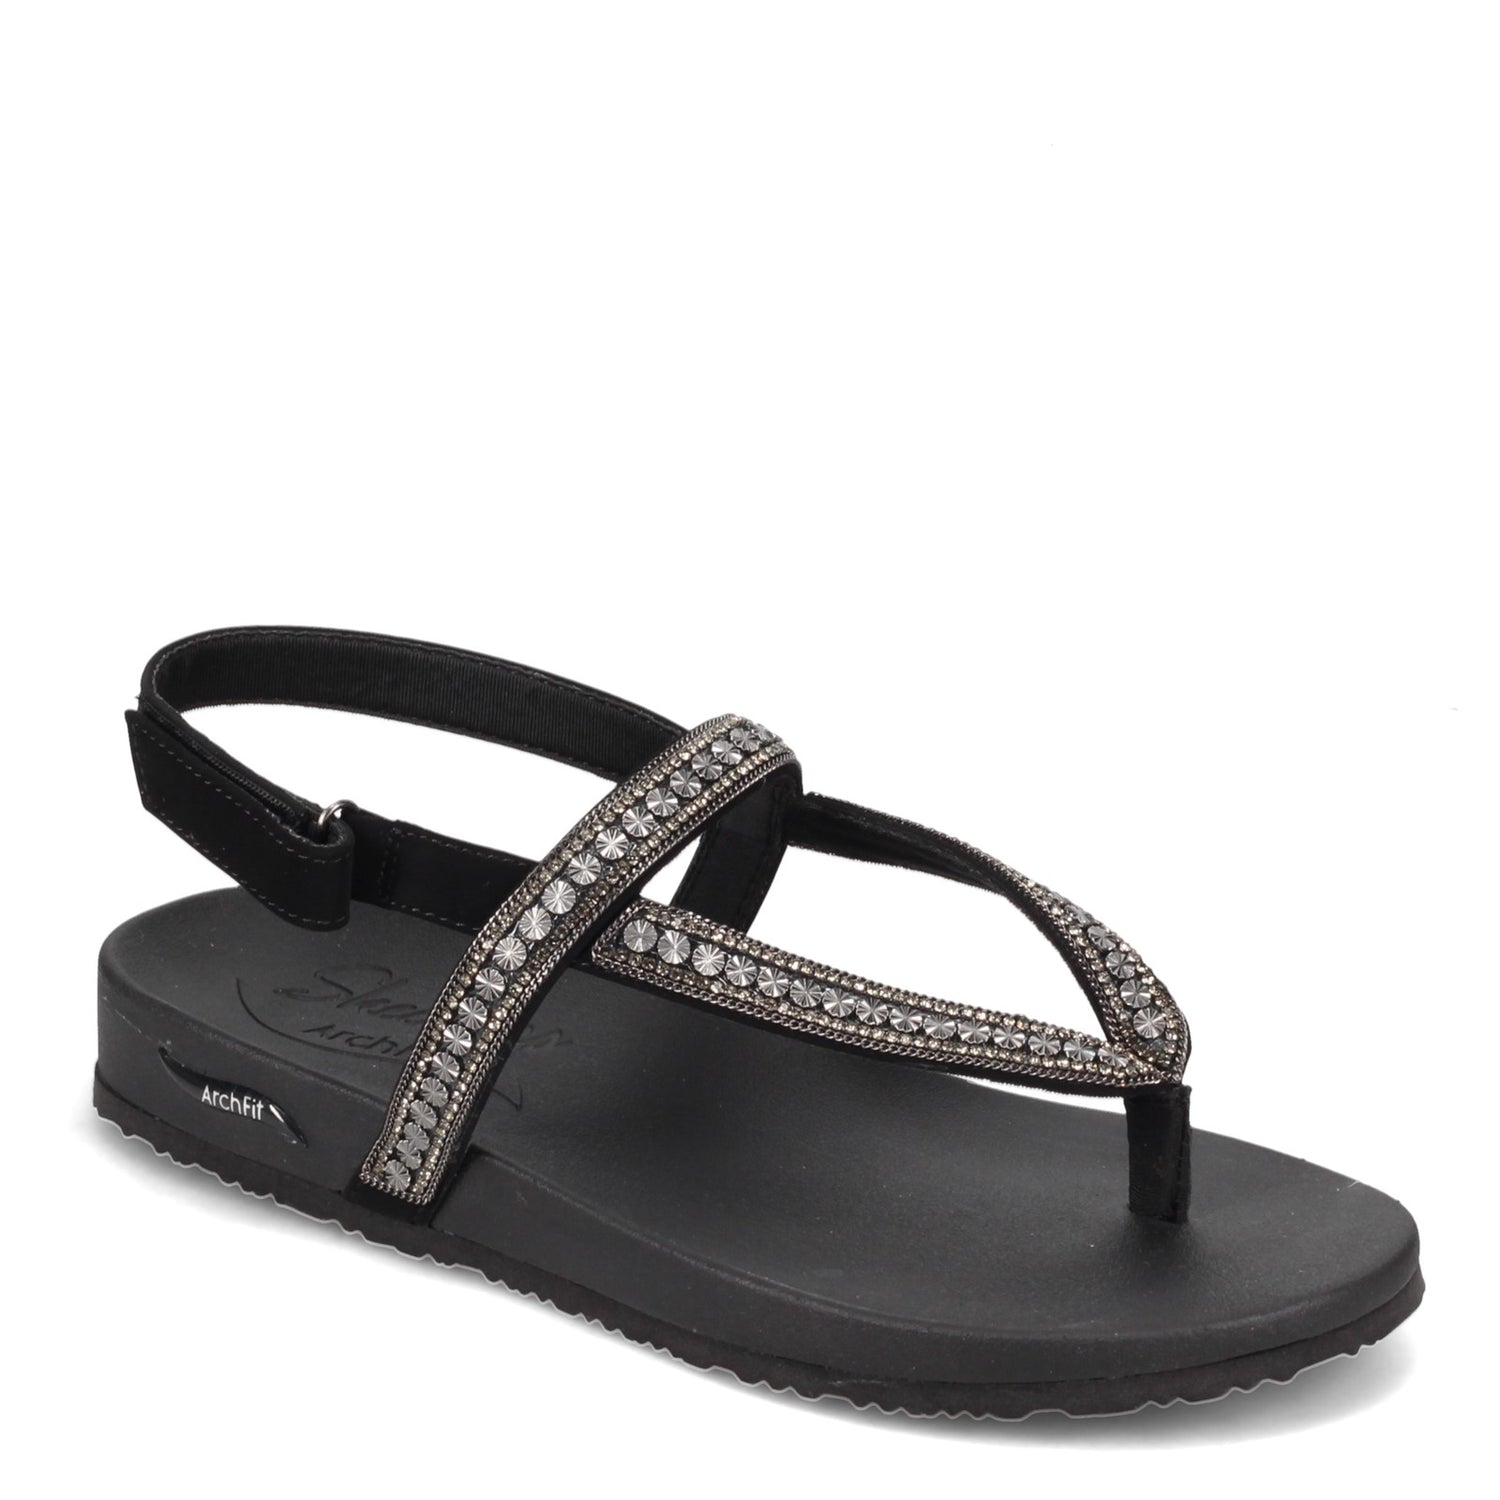 Supplefeet  Yoga Sandals Comfys - Black